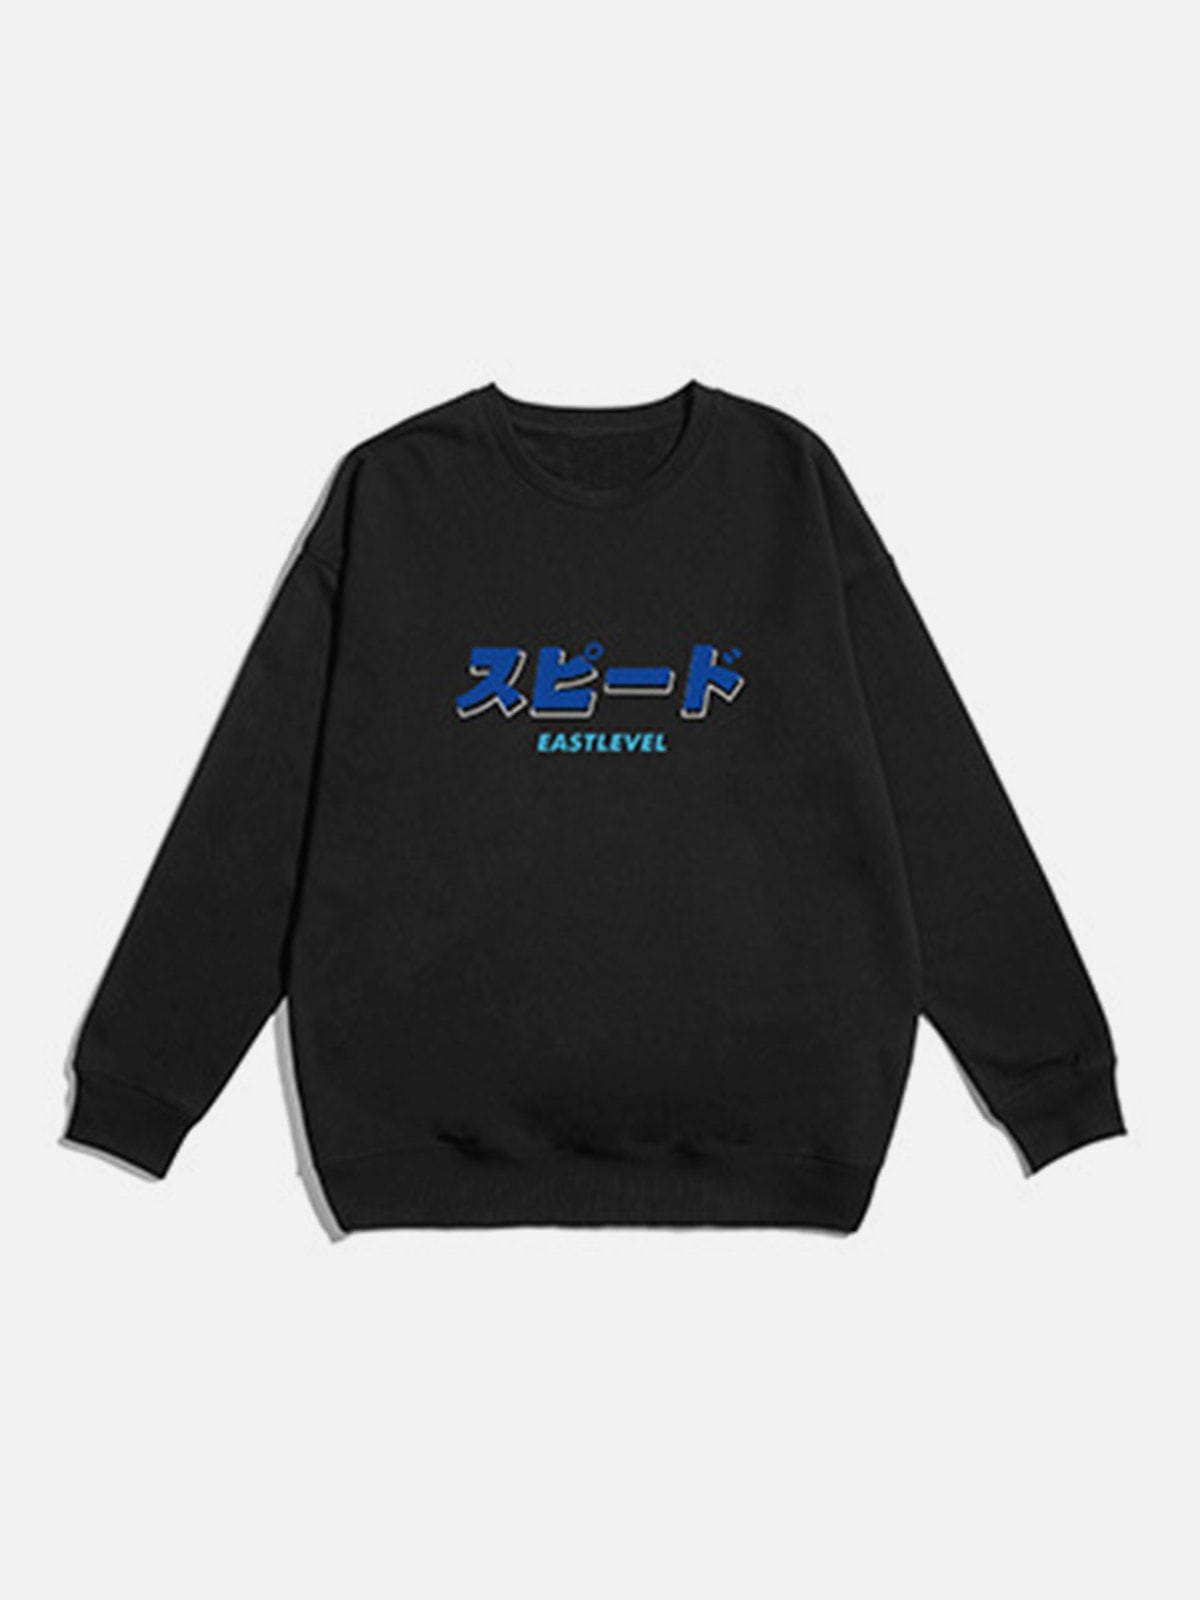 LUXENFY™ - Japanese Phrase Print Sweatshirt luxenfy.com